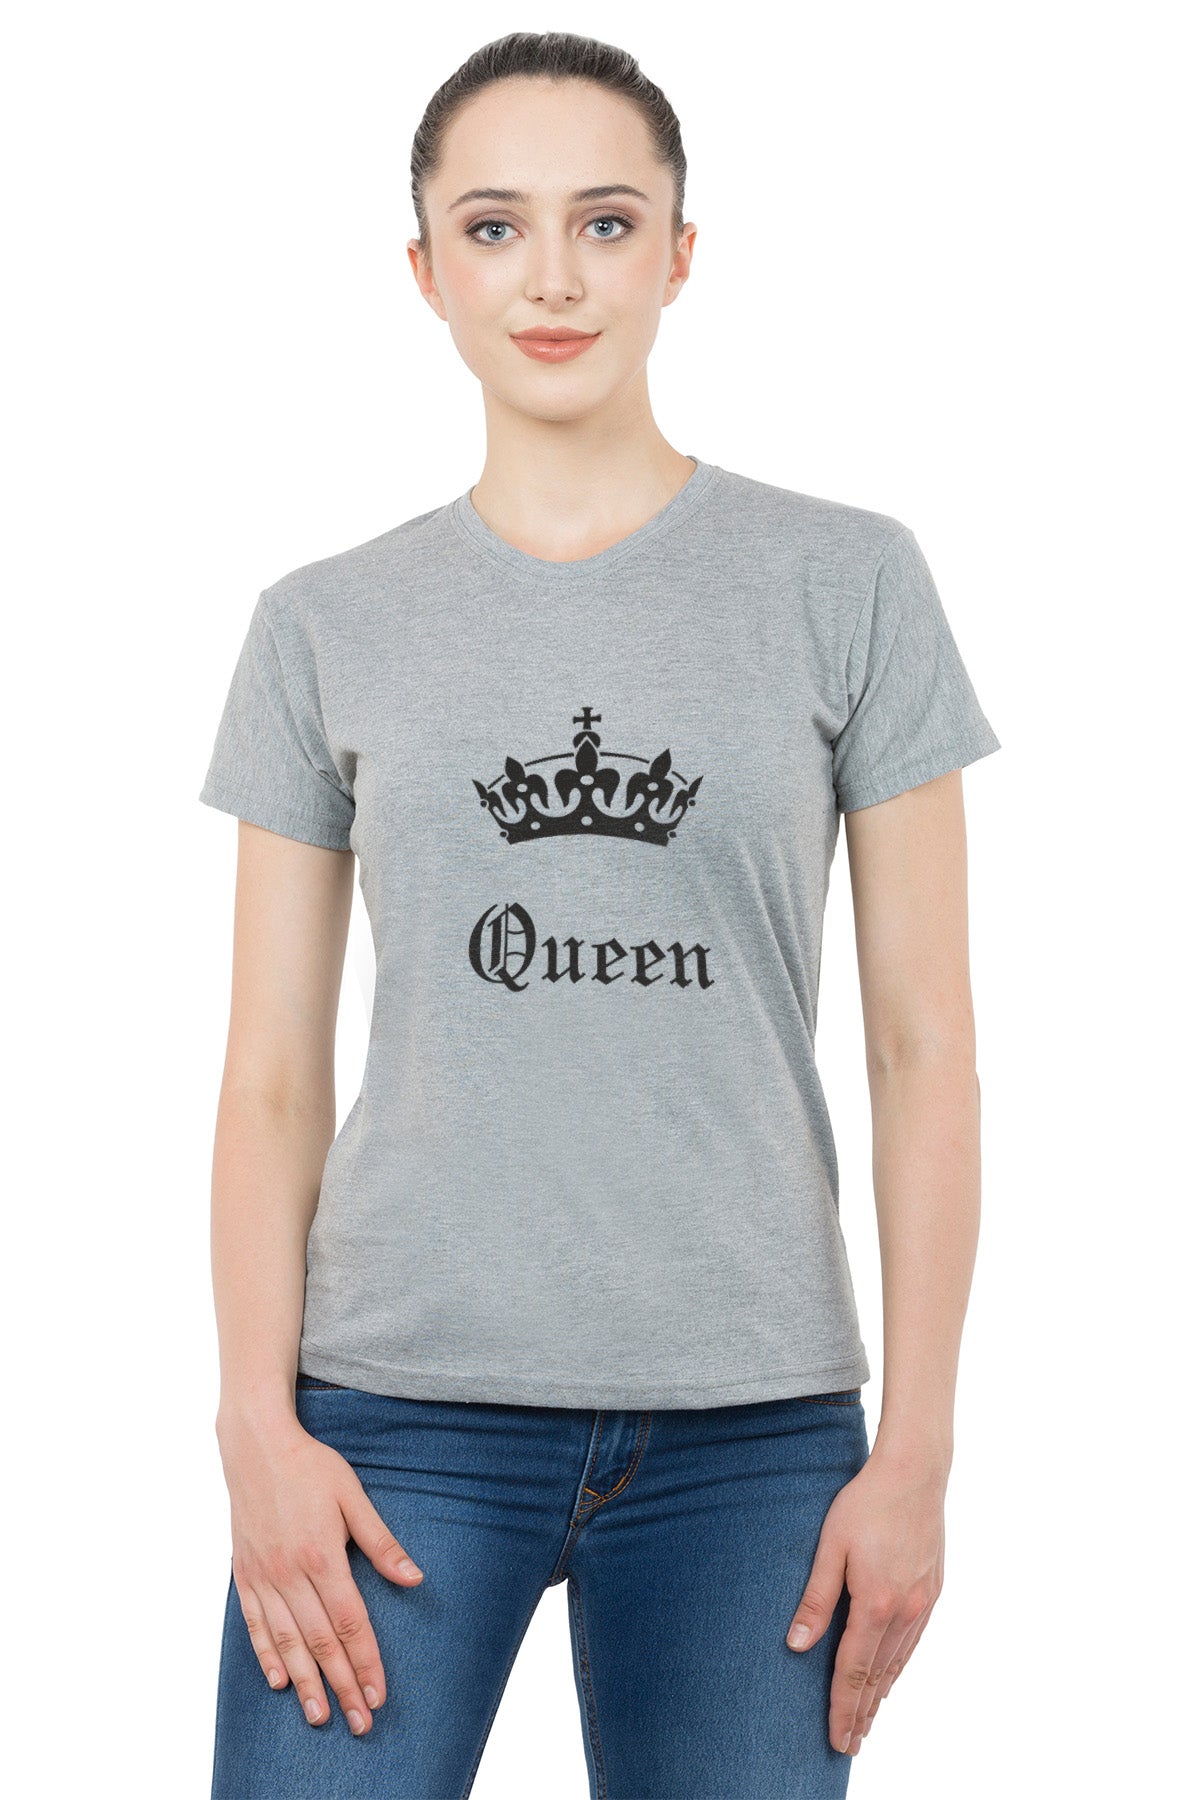 King Queen matching Couple T shirts- Grey